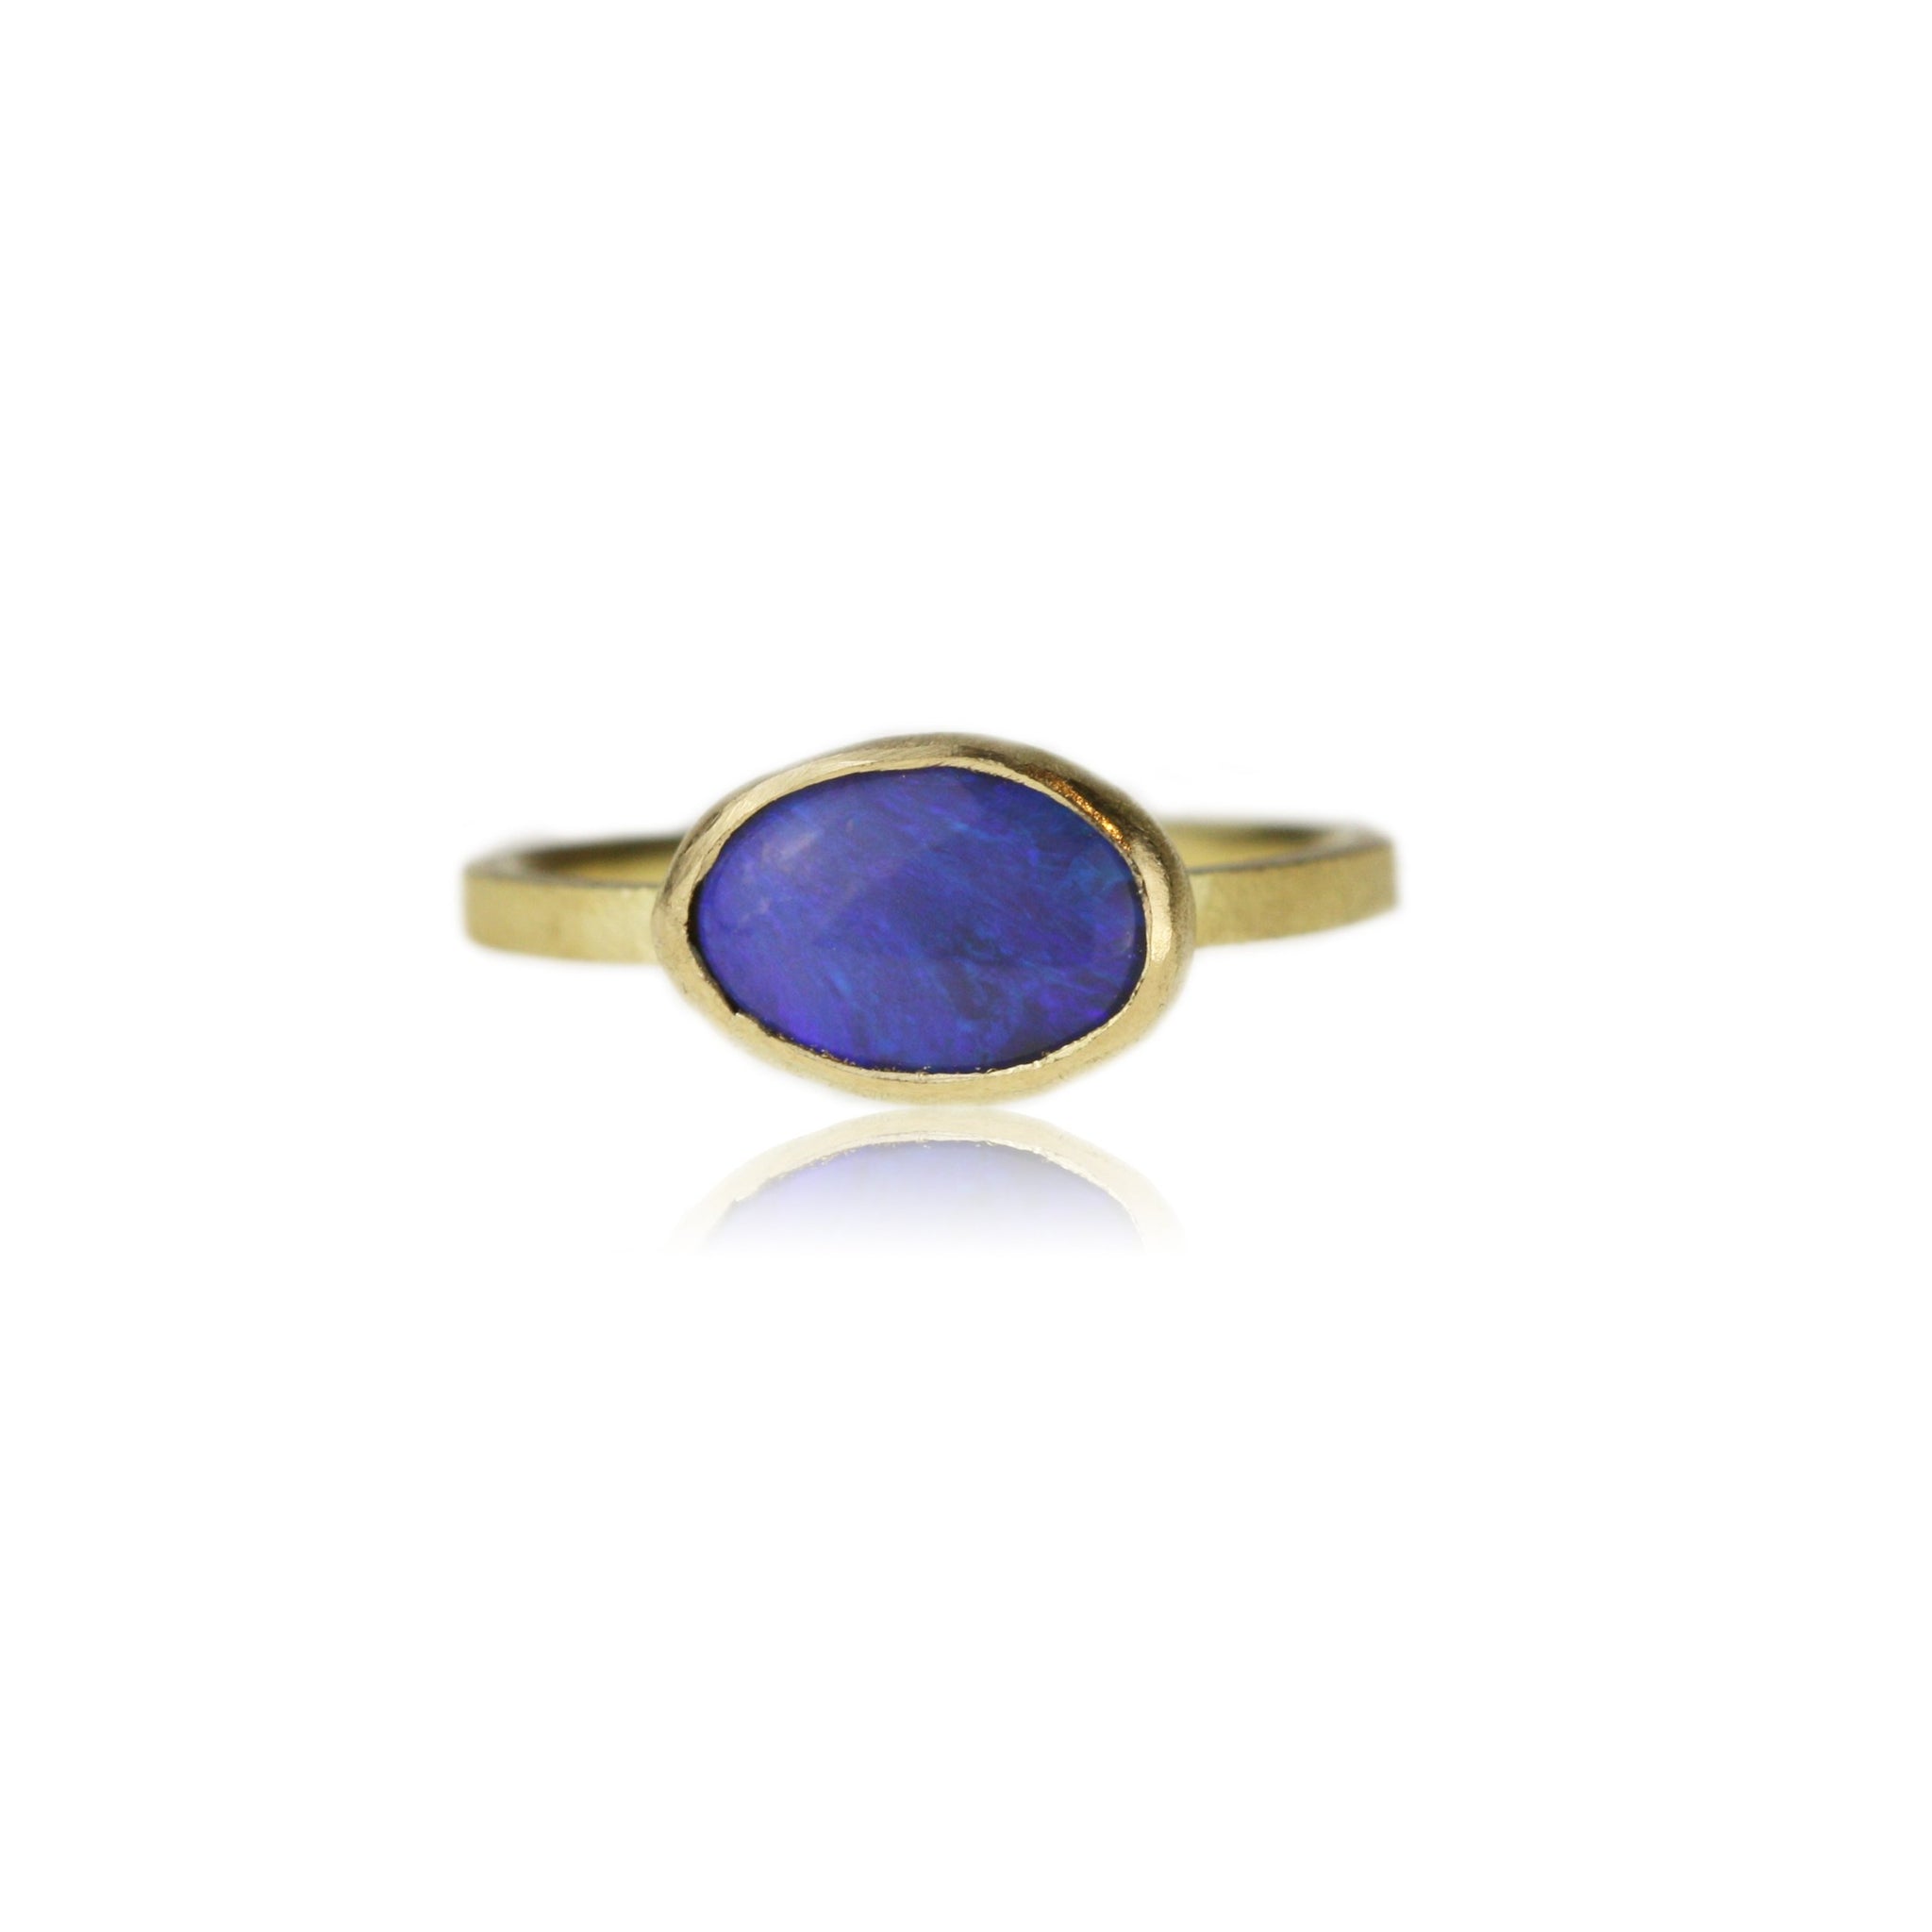 Elegant Blue Opal Ring